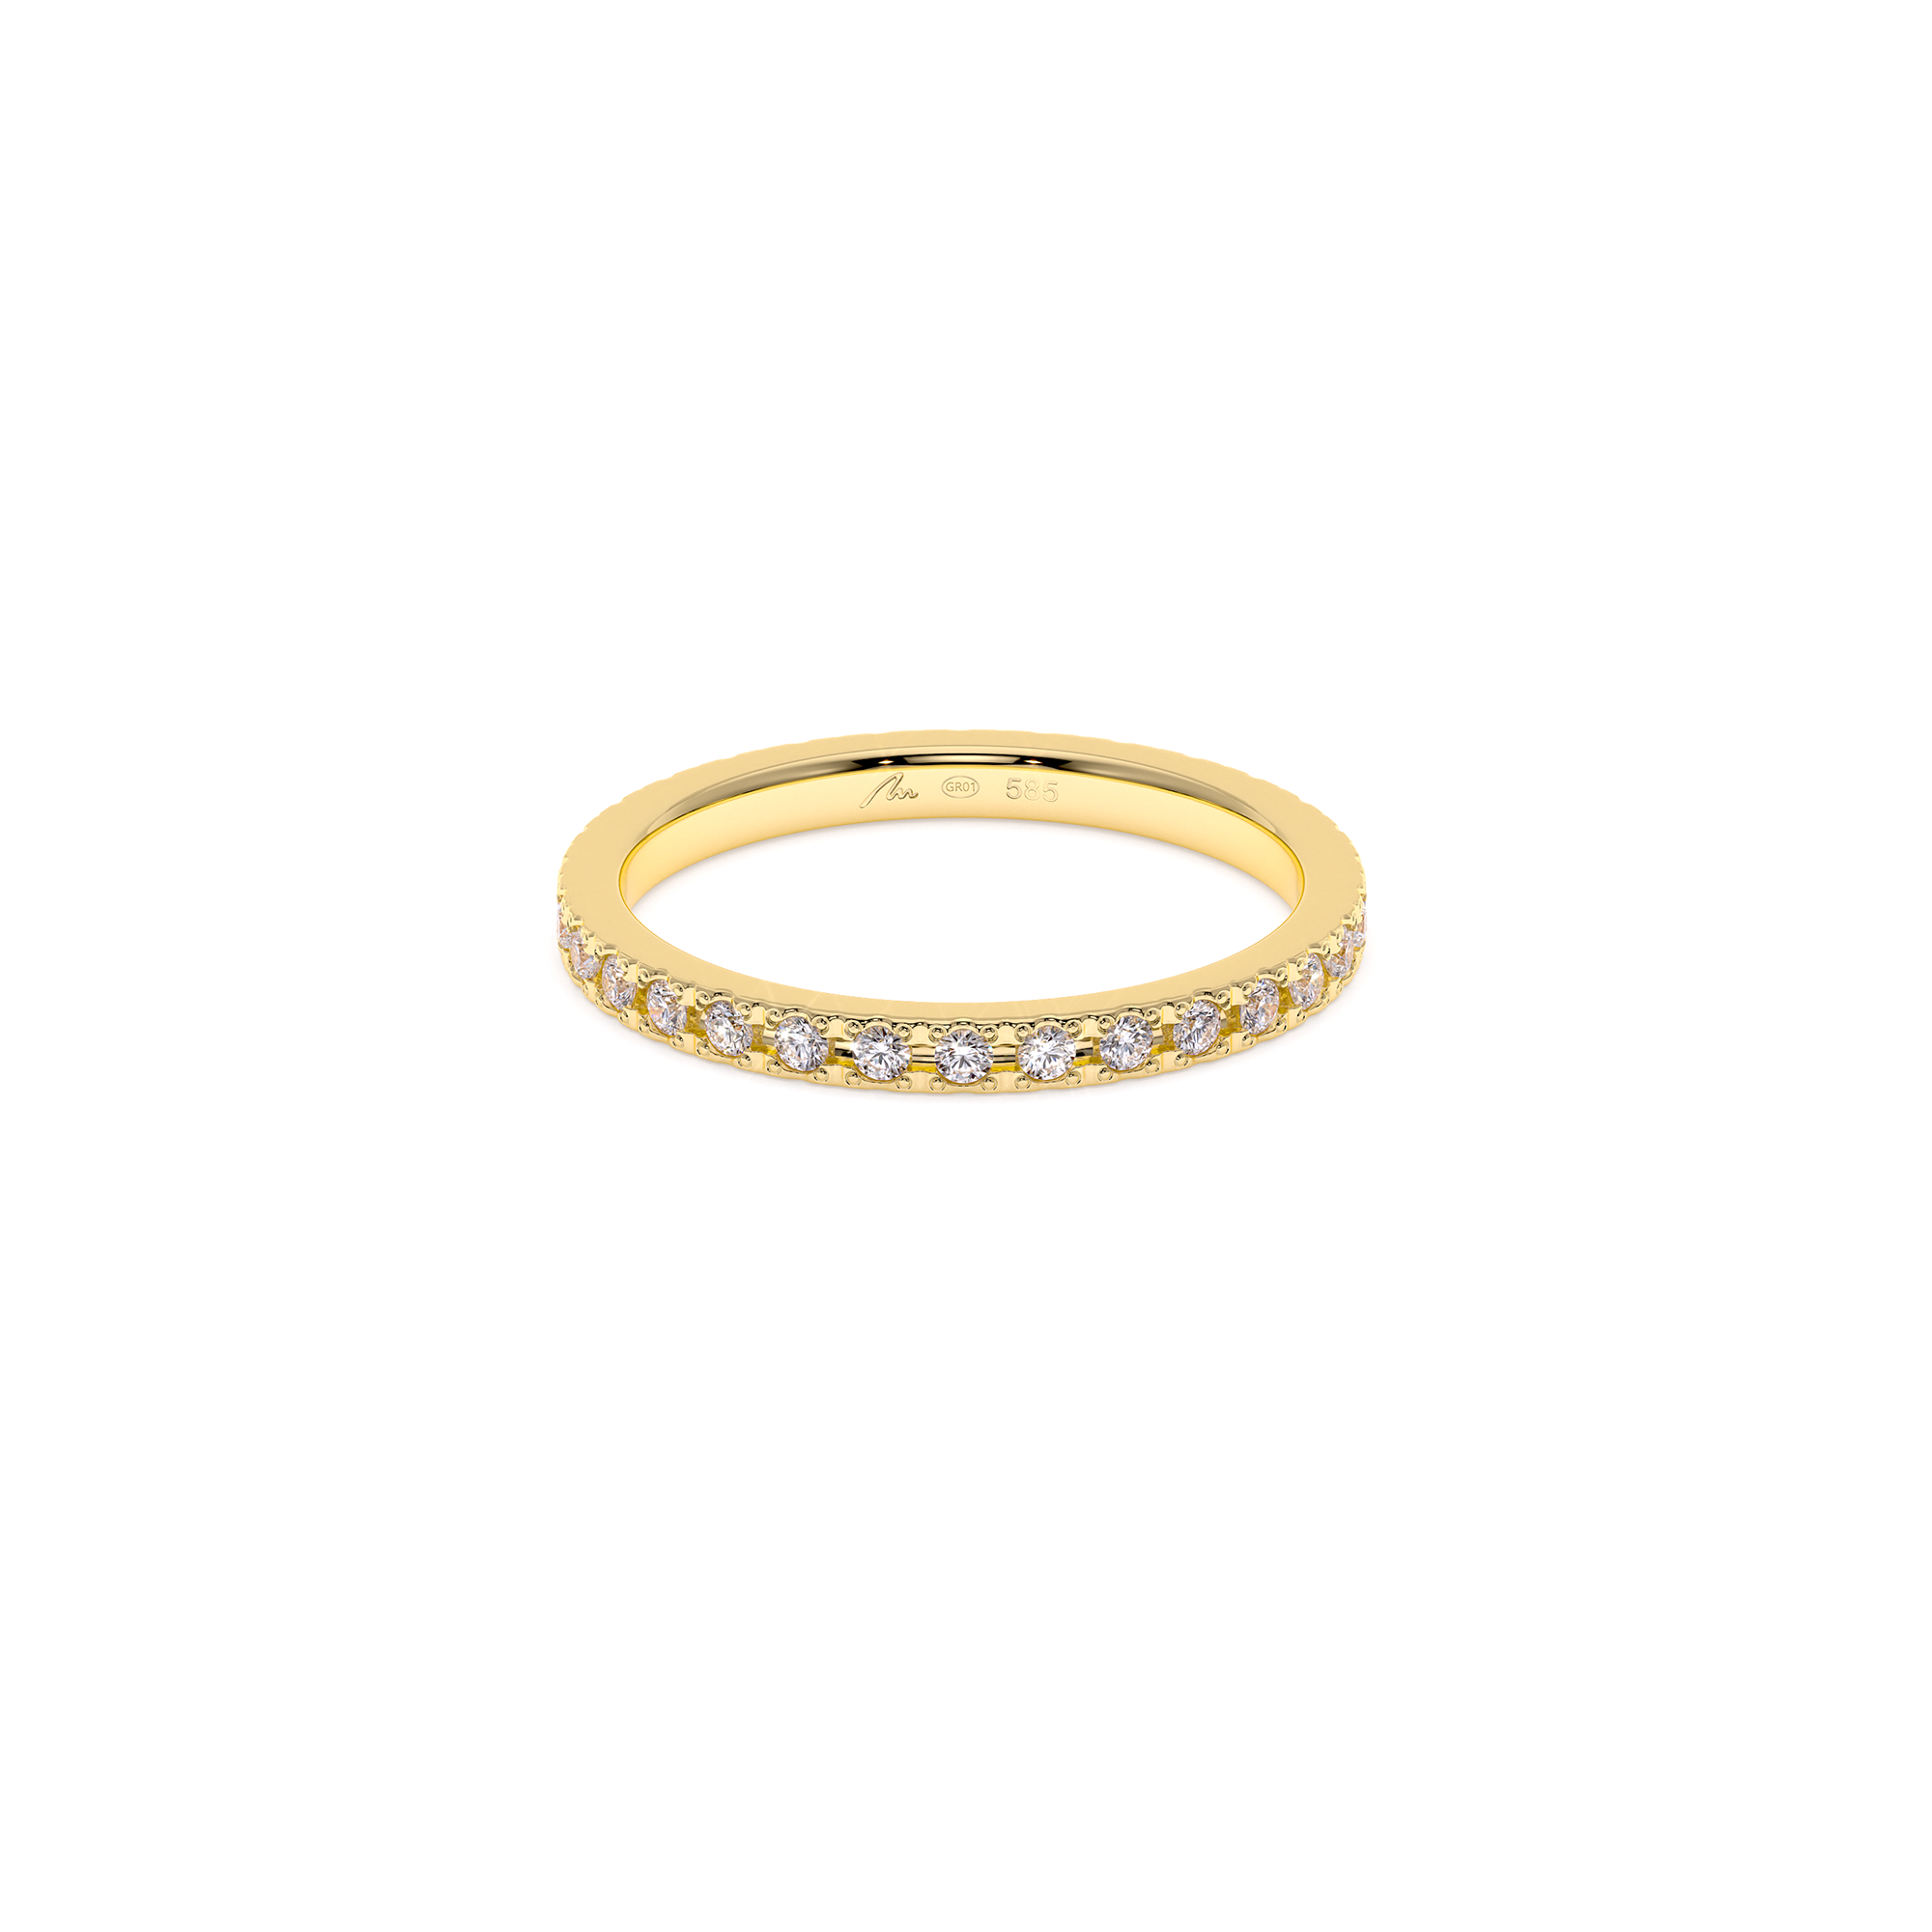 14 k yellow gold Tennis ring with 0.45 CT white diamonds